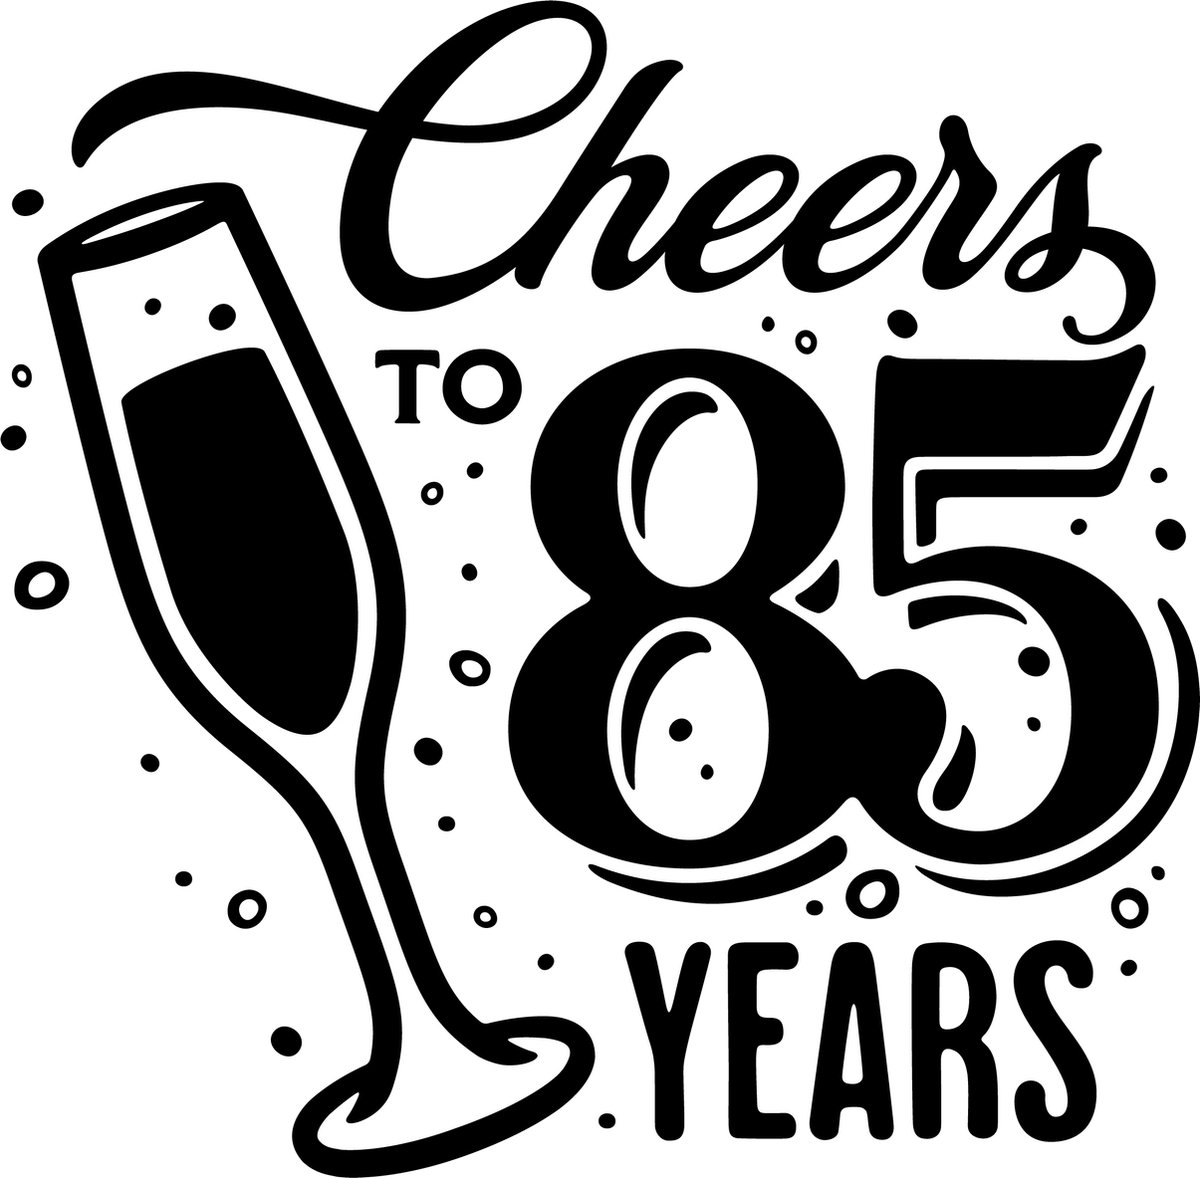 Sticker - Cheers to 85 years - 20x20cm - wit - 1 stuks - stickers - verjaardag - verjaardag decoratie - verjaardag versiering - feest - feest versiering - feestartikelen - raamstickers - raamsticker - Stickers volwassenen